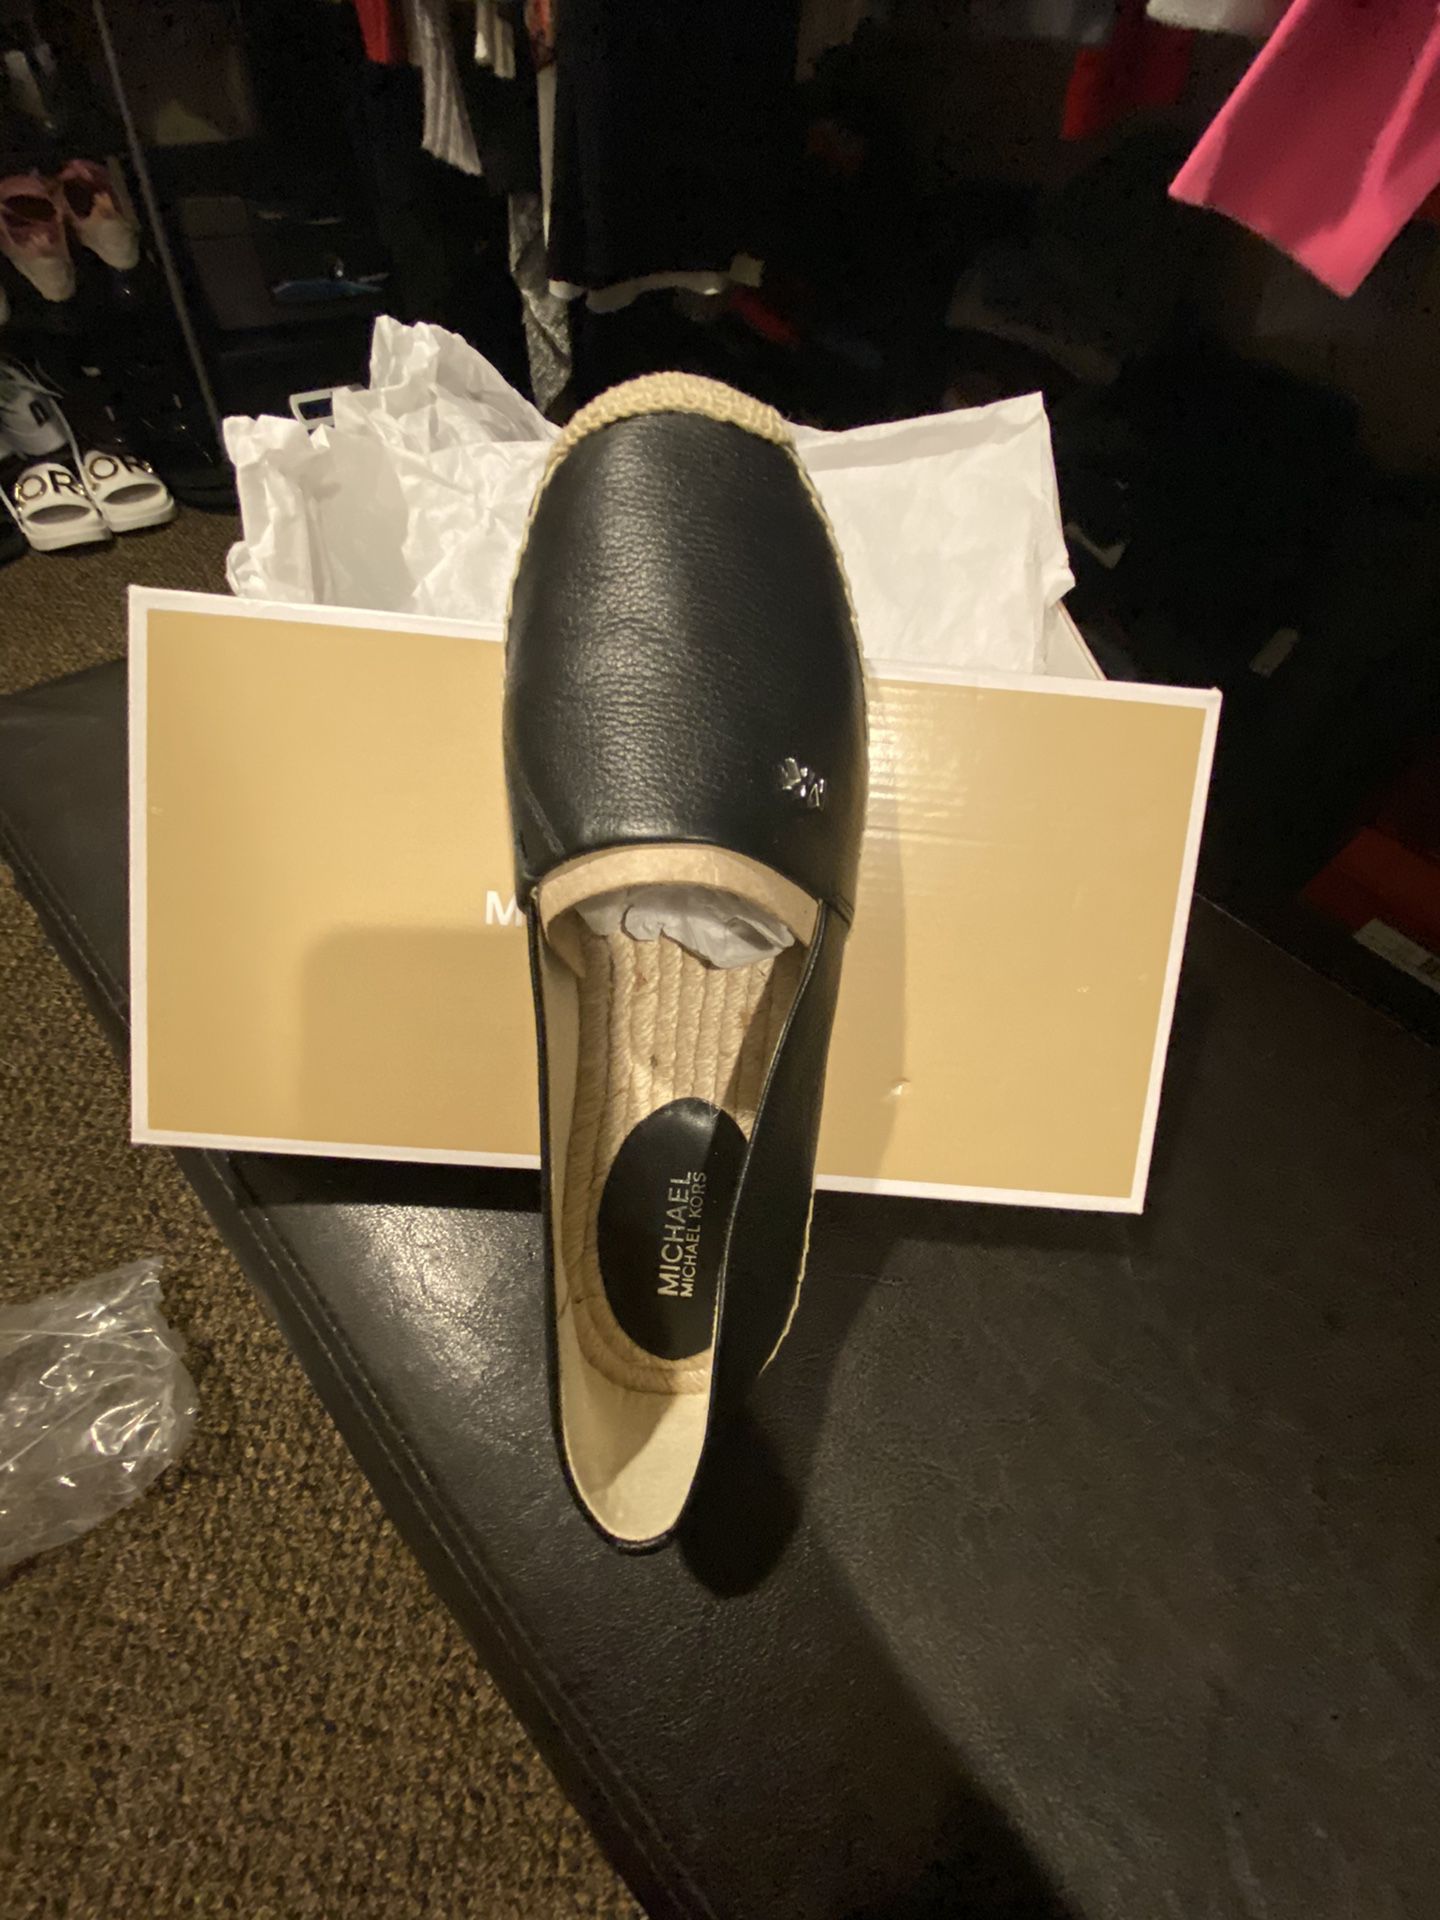 Michael Kors flat sandals new in box